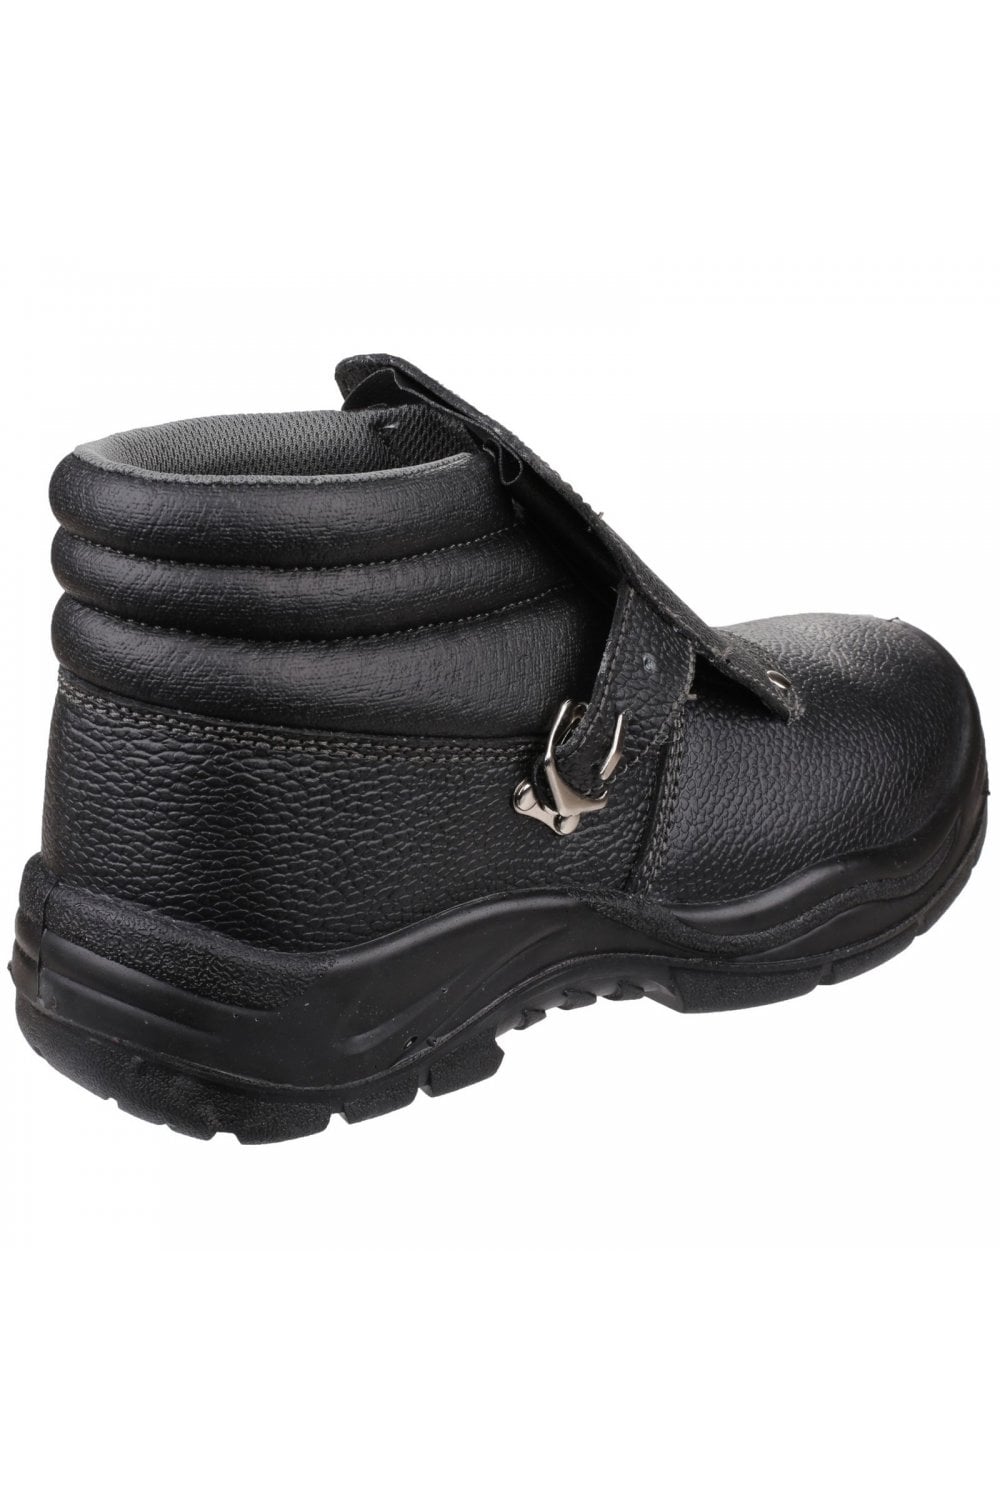 Centek Men's Glyder Welding Water Resistant Safety Boot